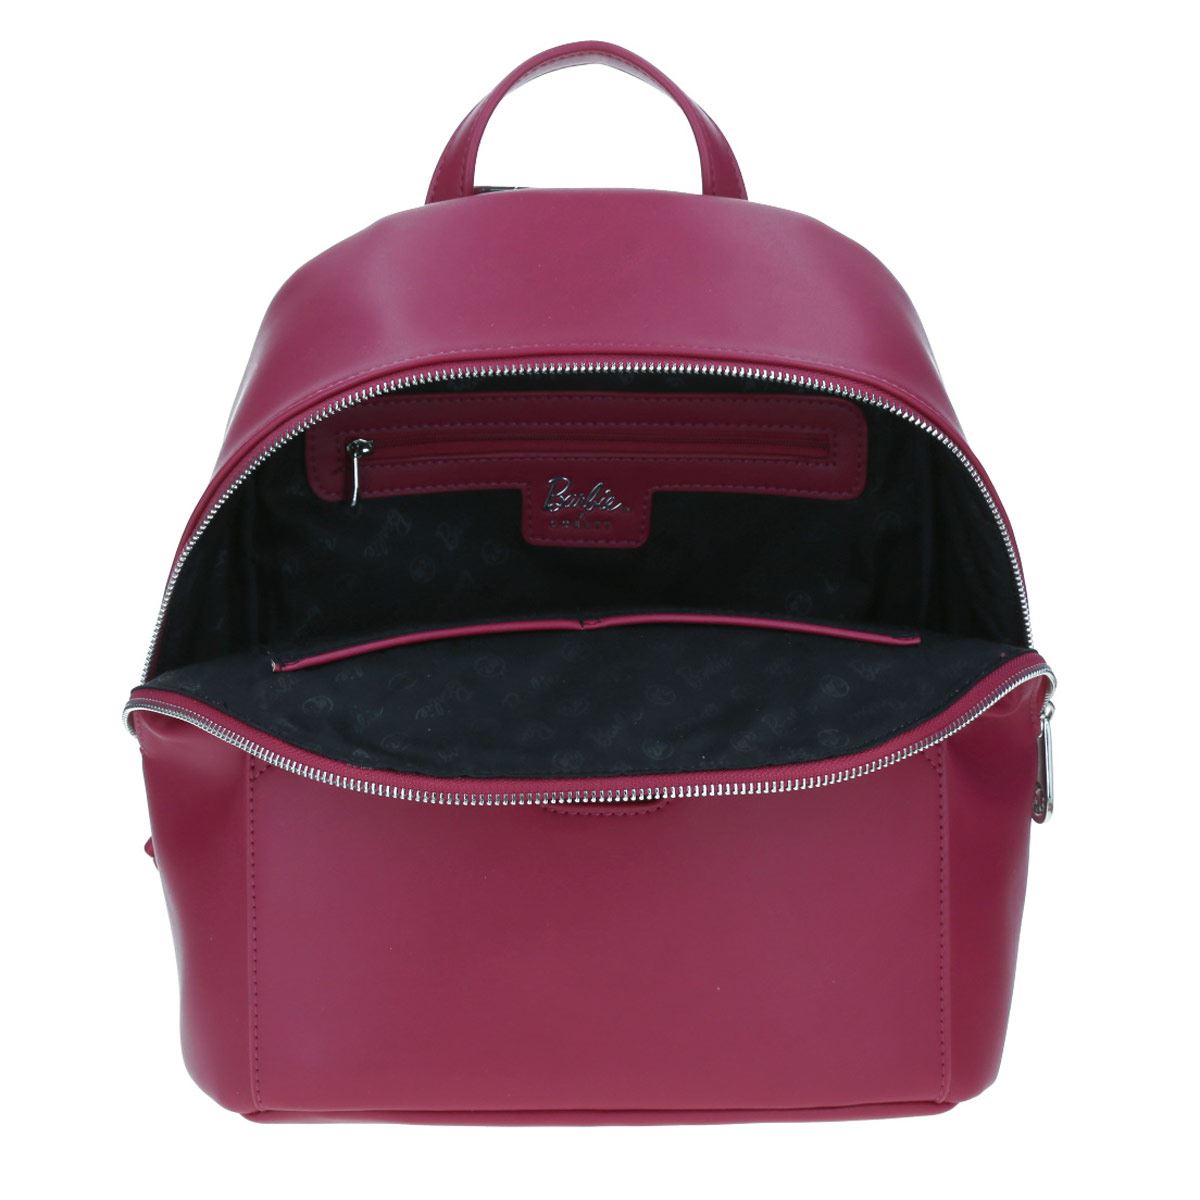 Mochila De Dama Barbie X Gorett Backpack Grande Color Rosa Modelo BR22095-P